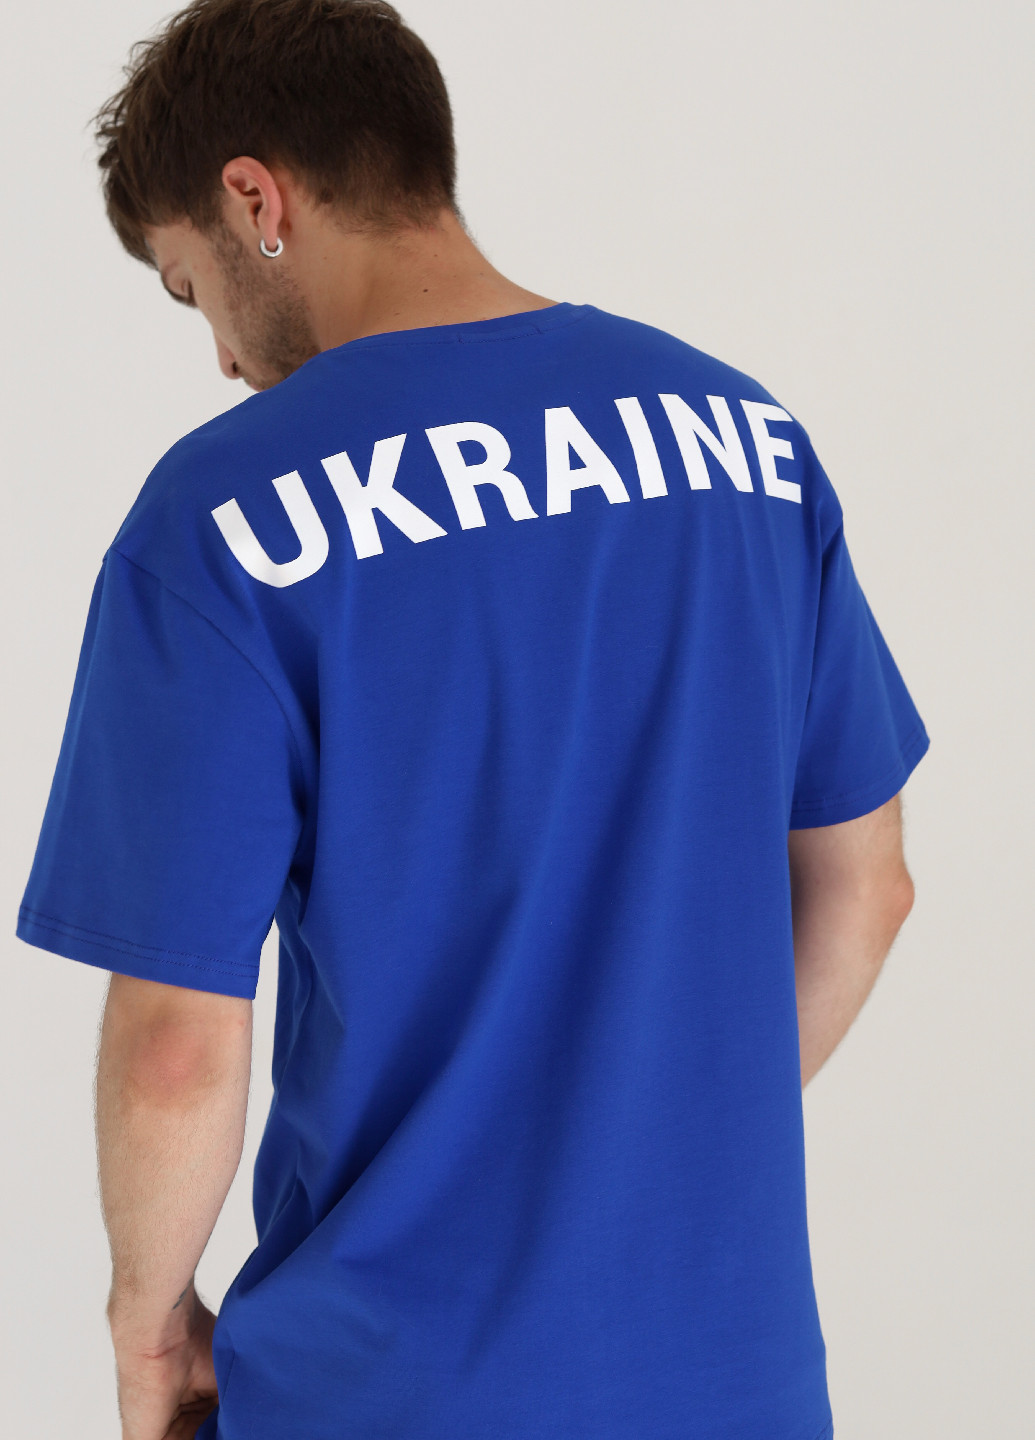 Синяя футболка "ukraine" синего цвета Rebellis